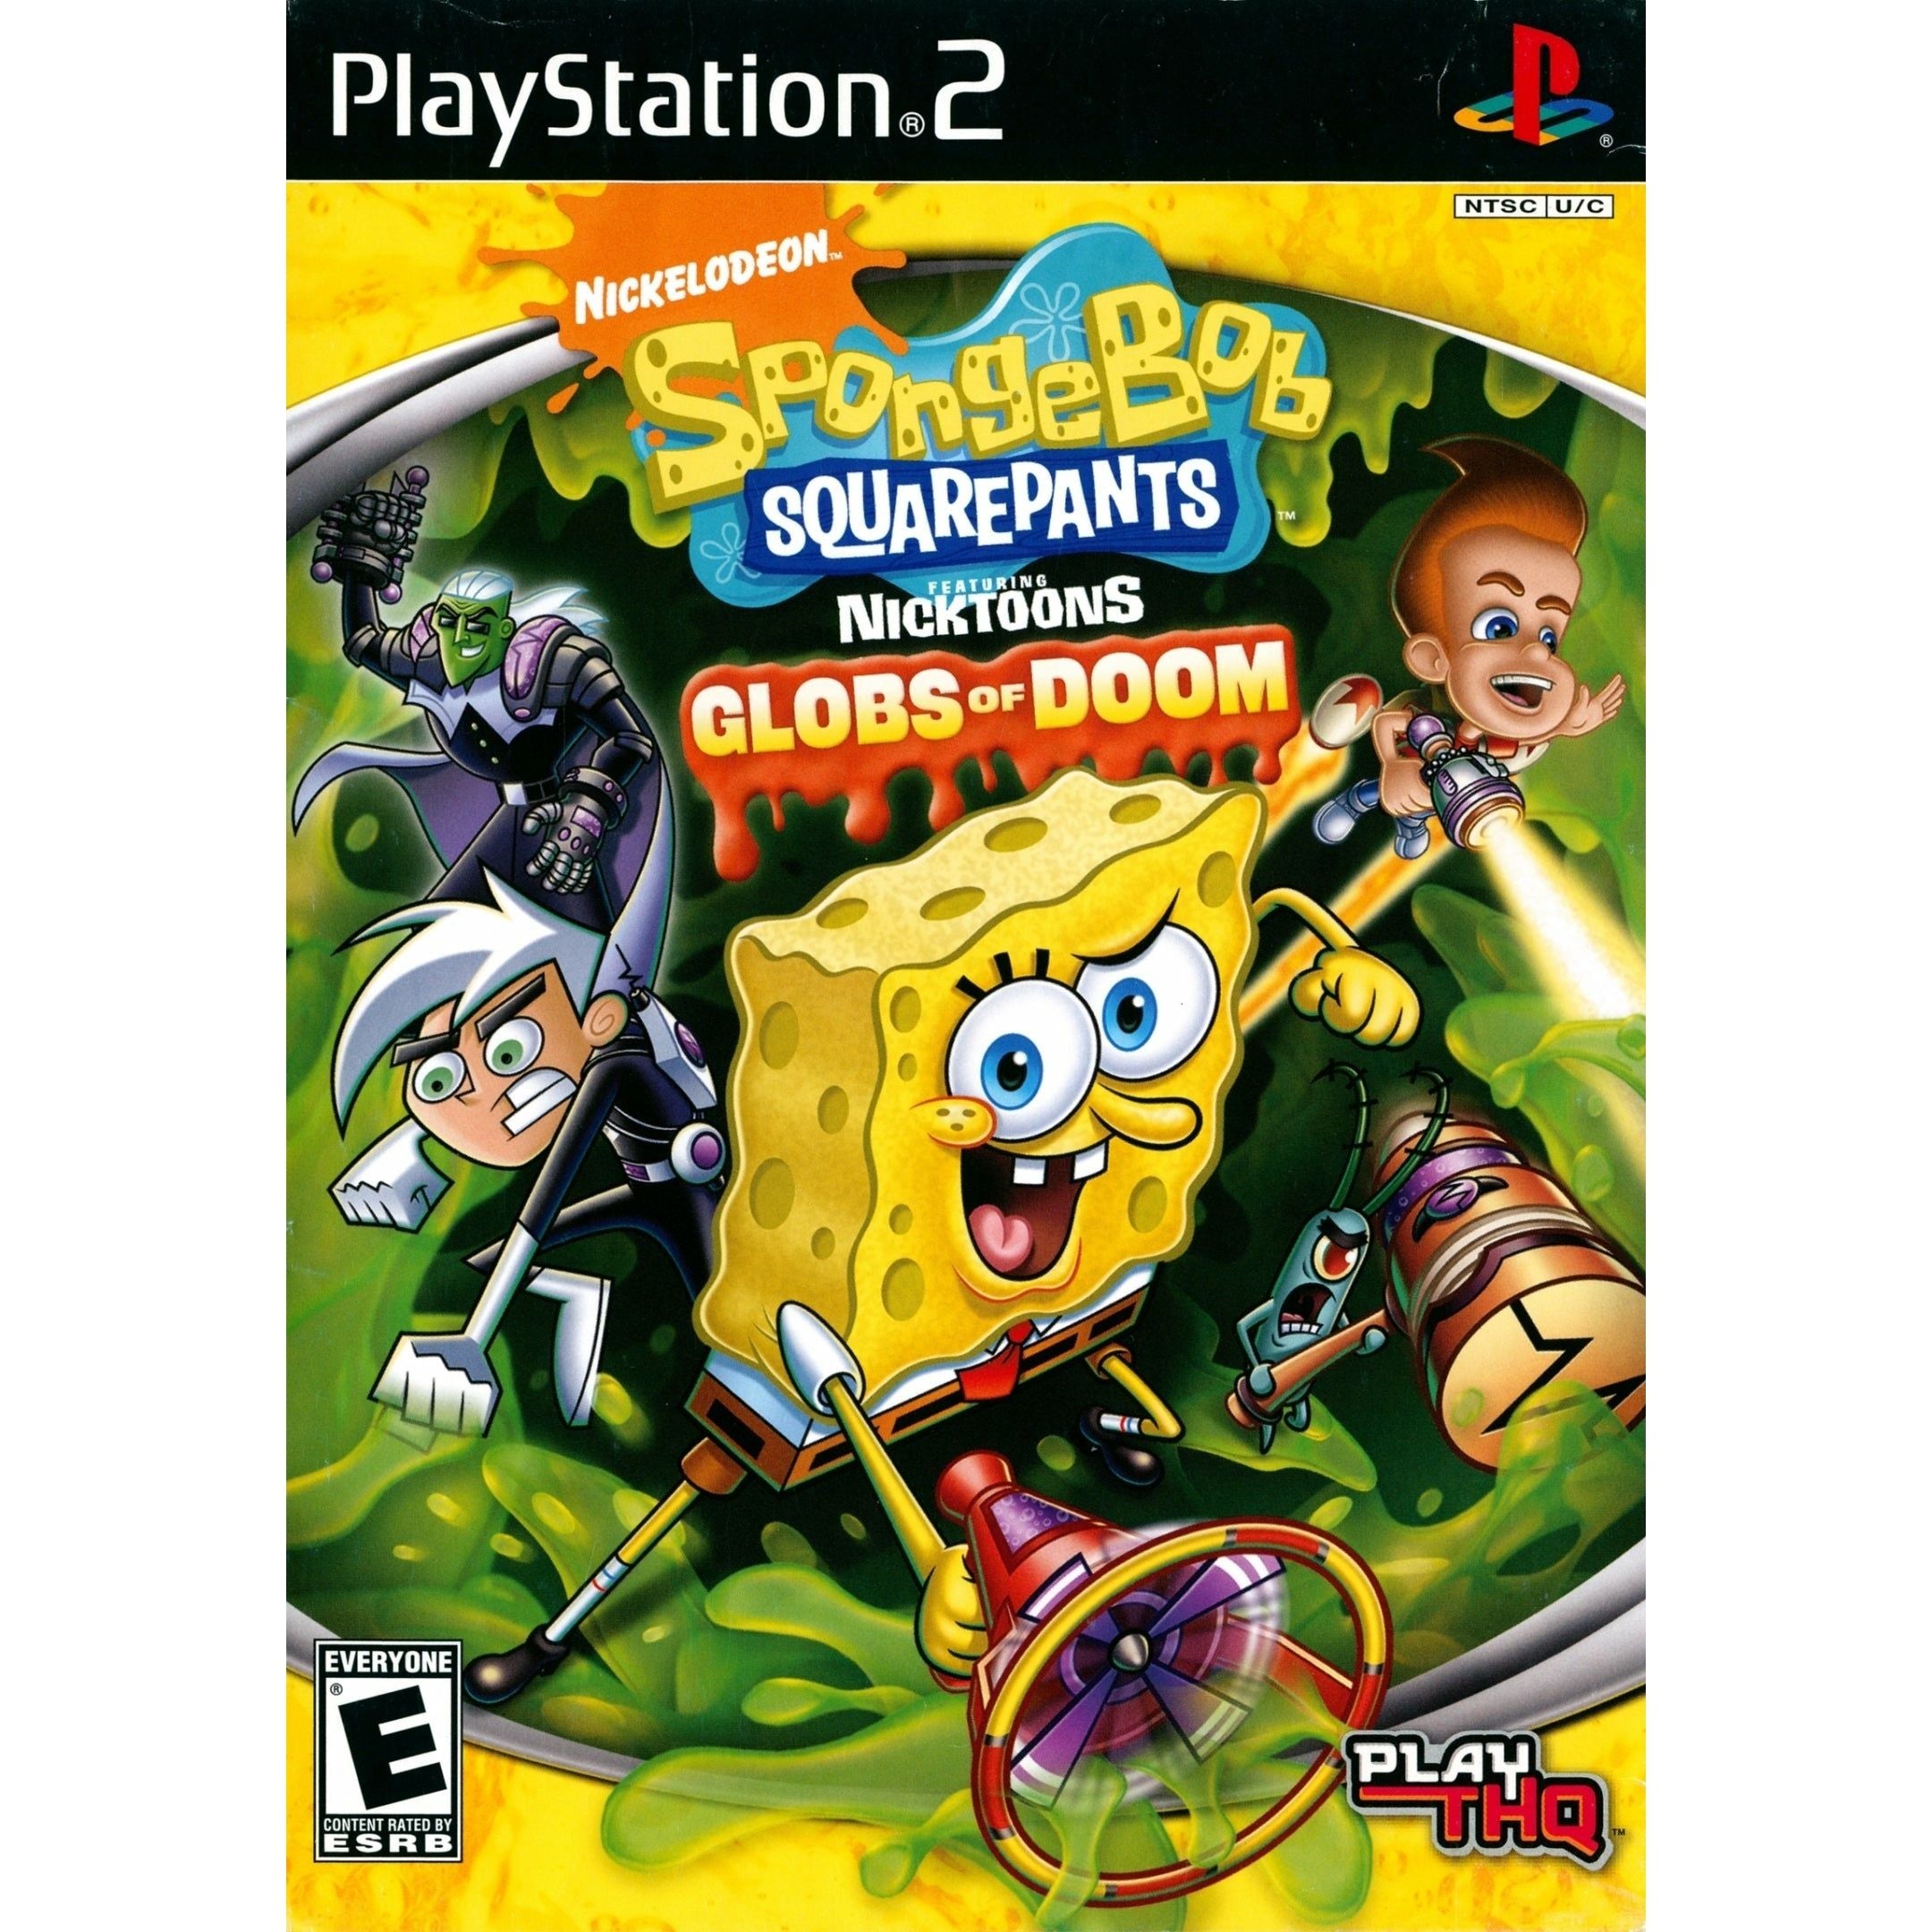 PS2 - Spongebob Squarepants Featuring Nicktoons Globs of Doom